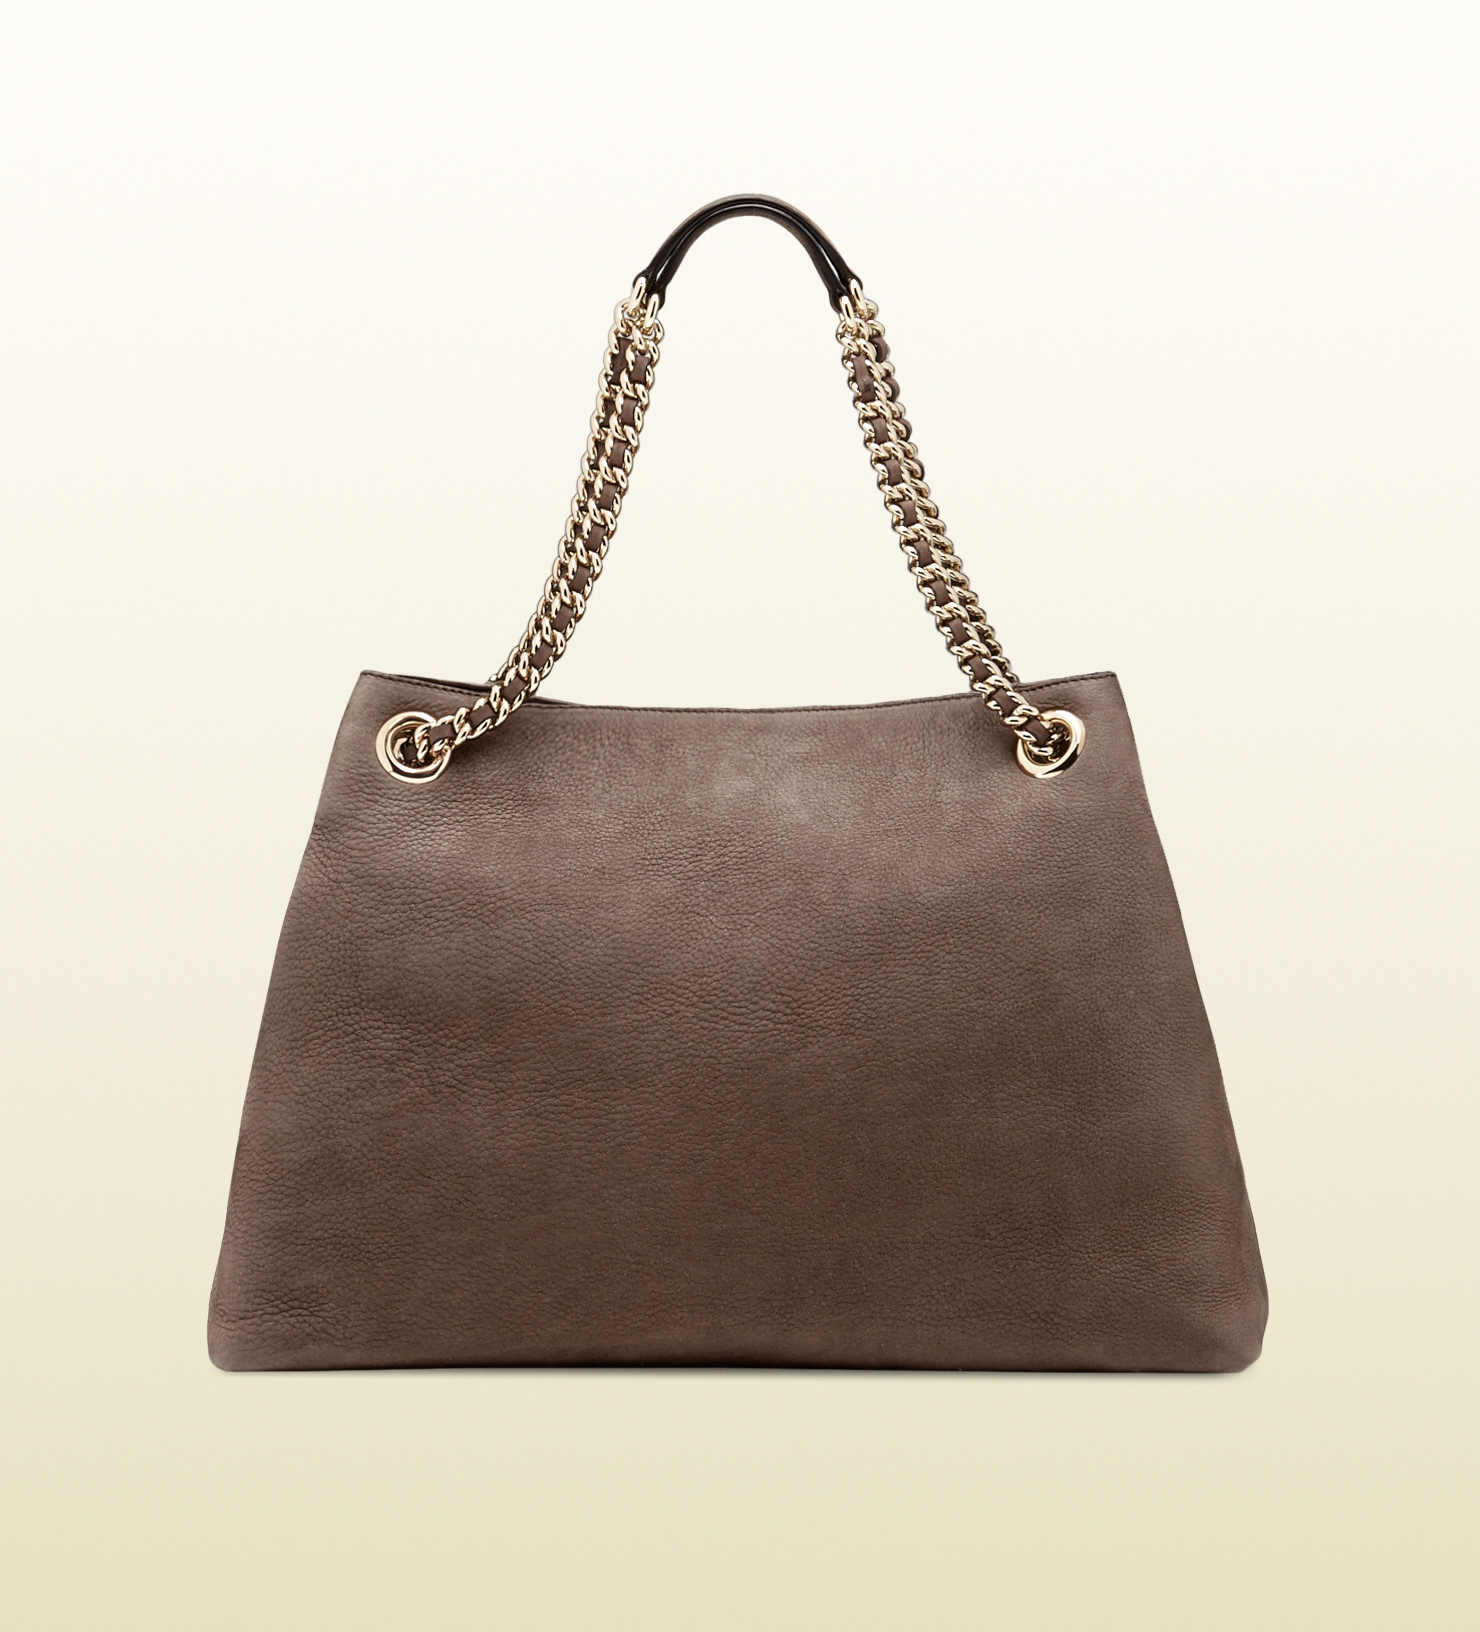 Lyst - Gucci Soho Nubuck Leather Shoulder Bag in Gray